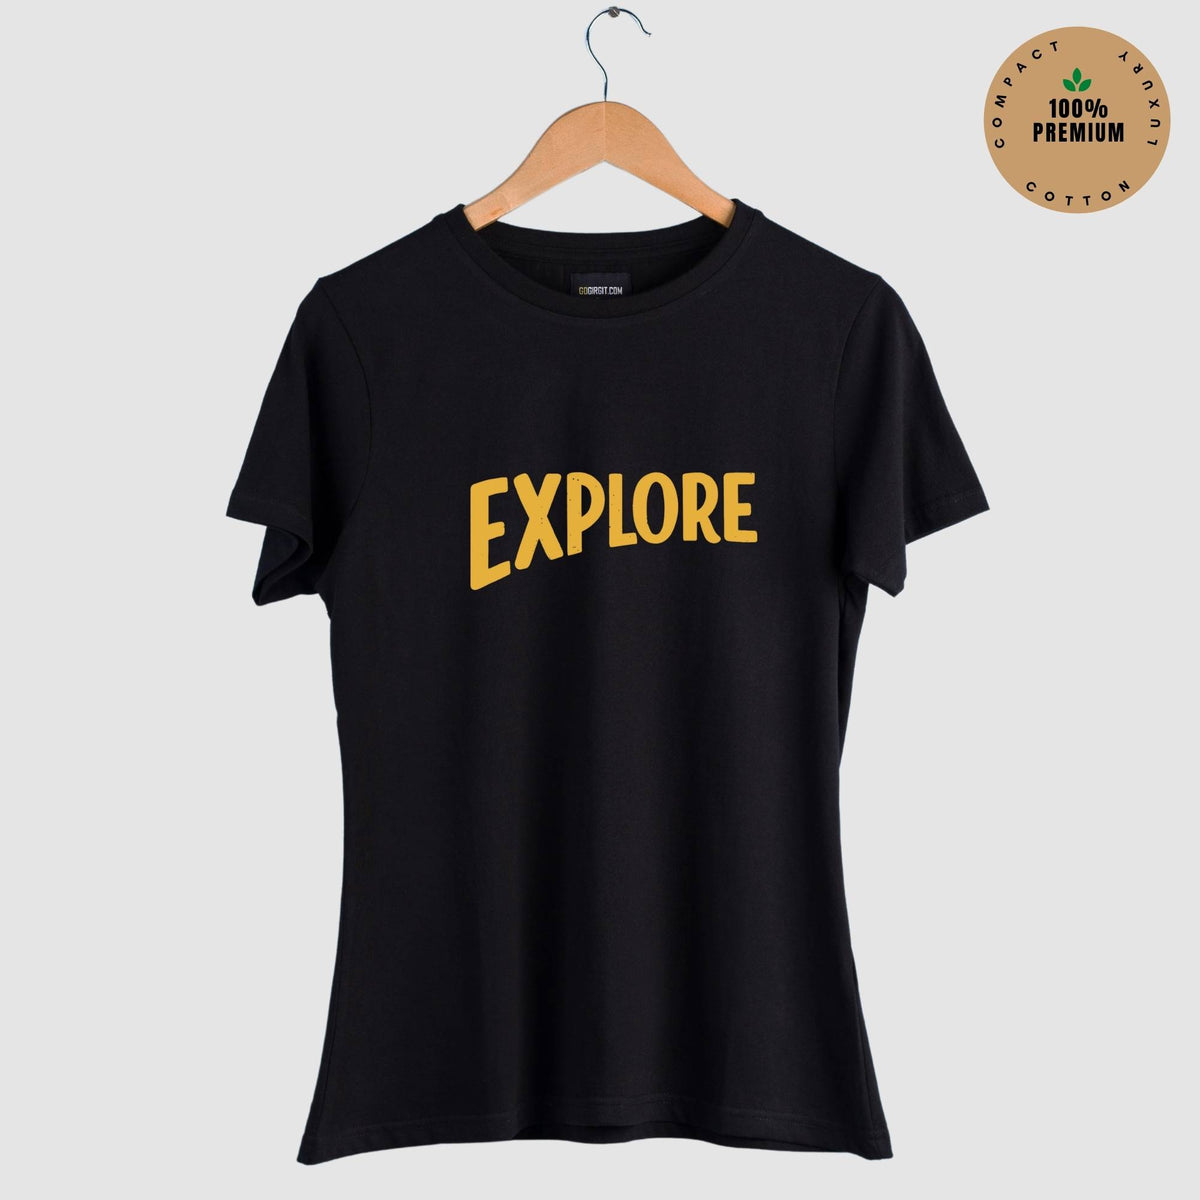 Explore Women's Half Sleeve Black T-shirt